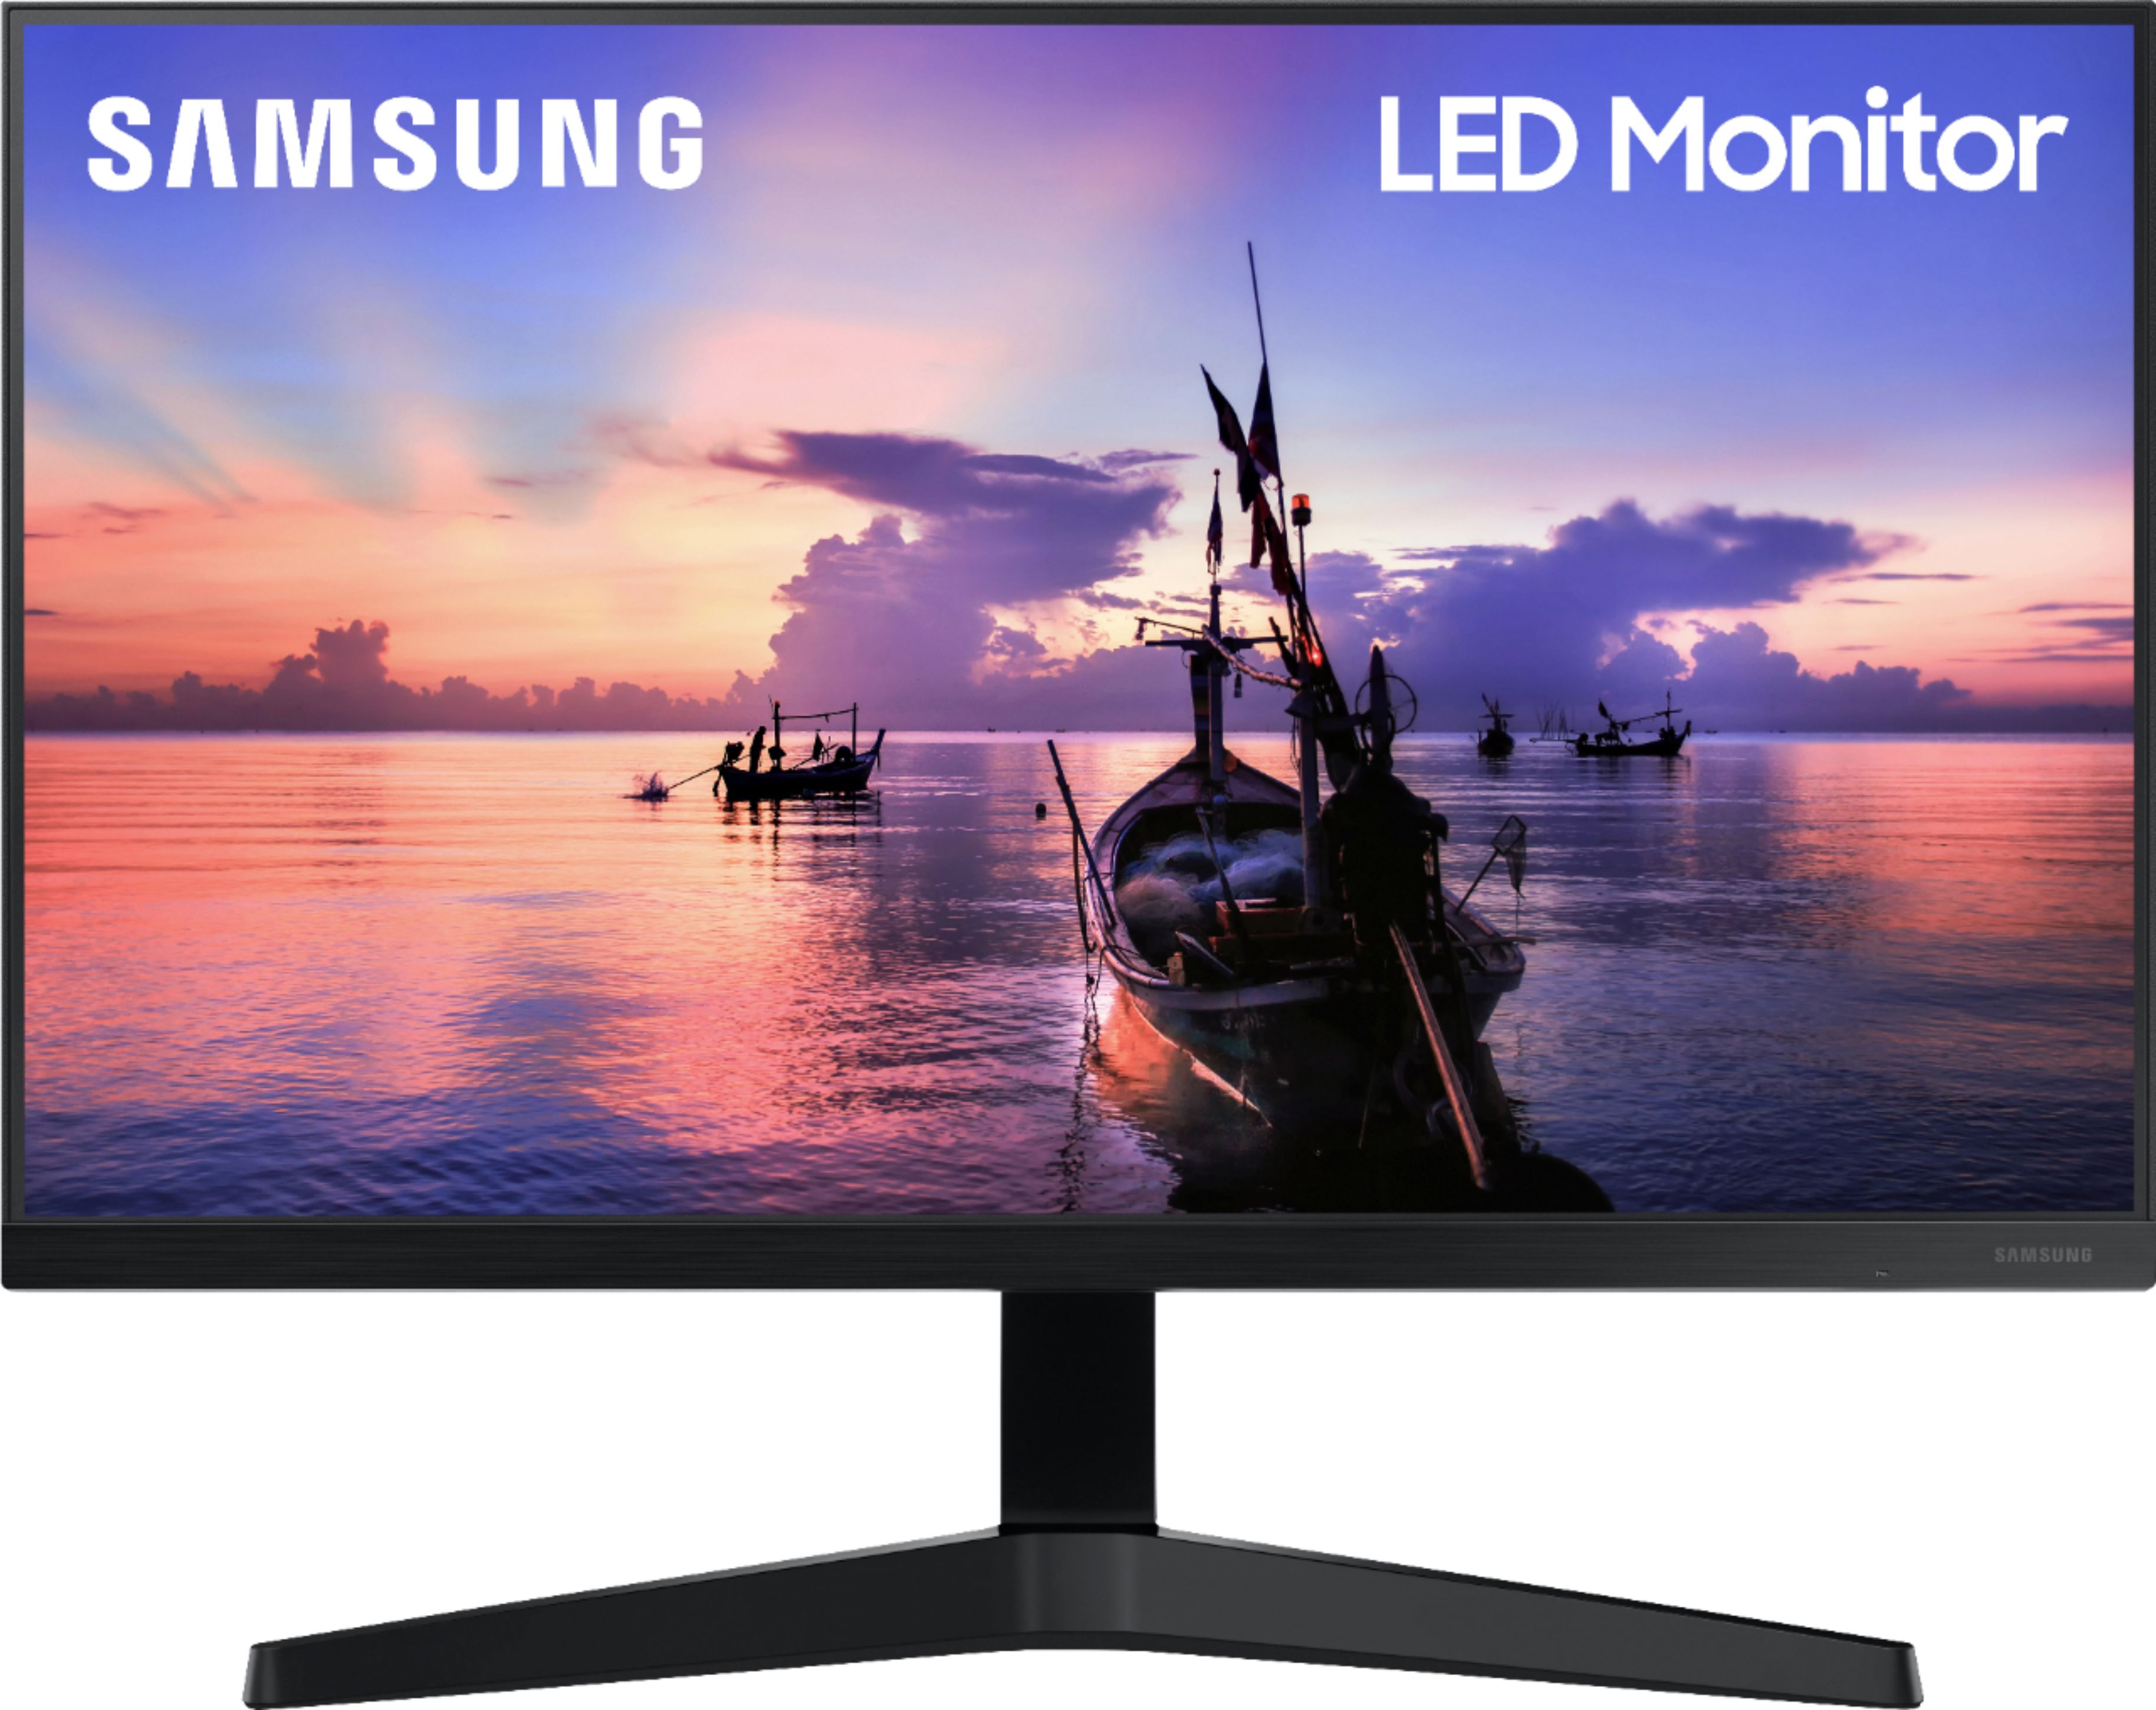 24 inch monitor - Best Buy